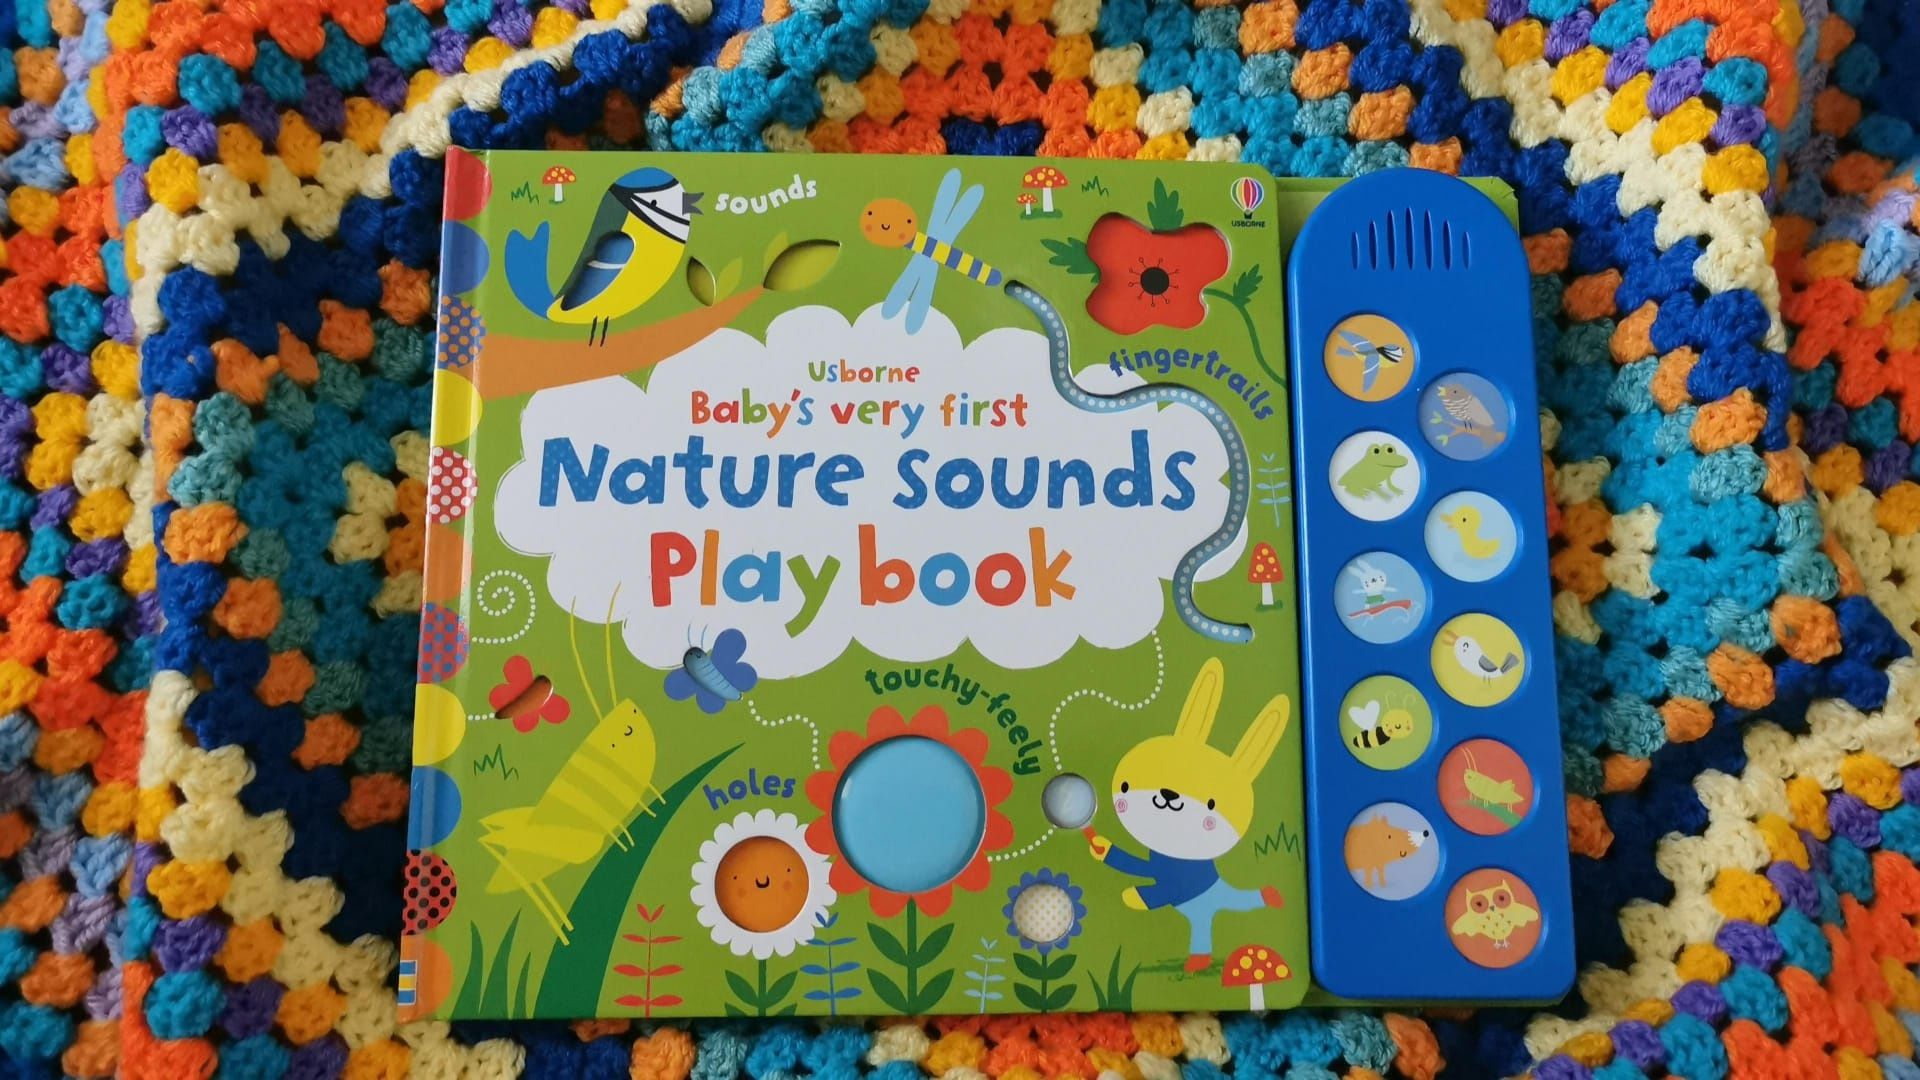 Usborne Nature sounds playbook